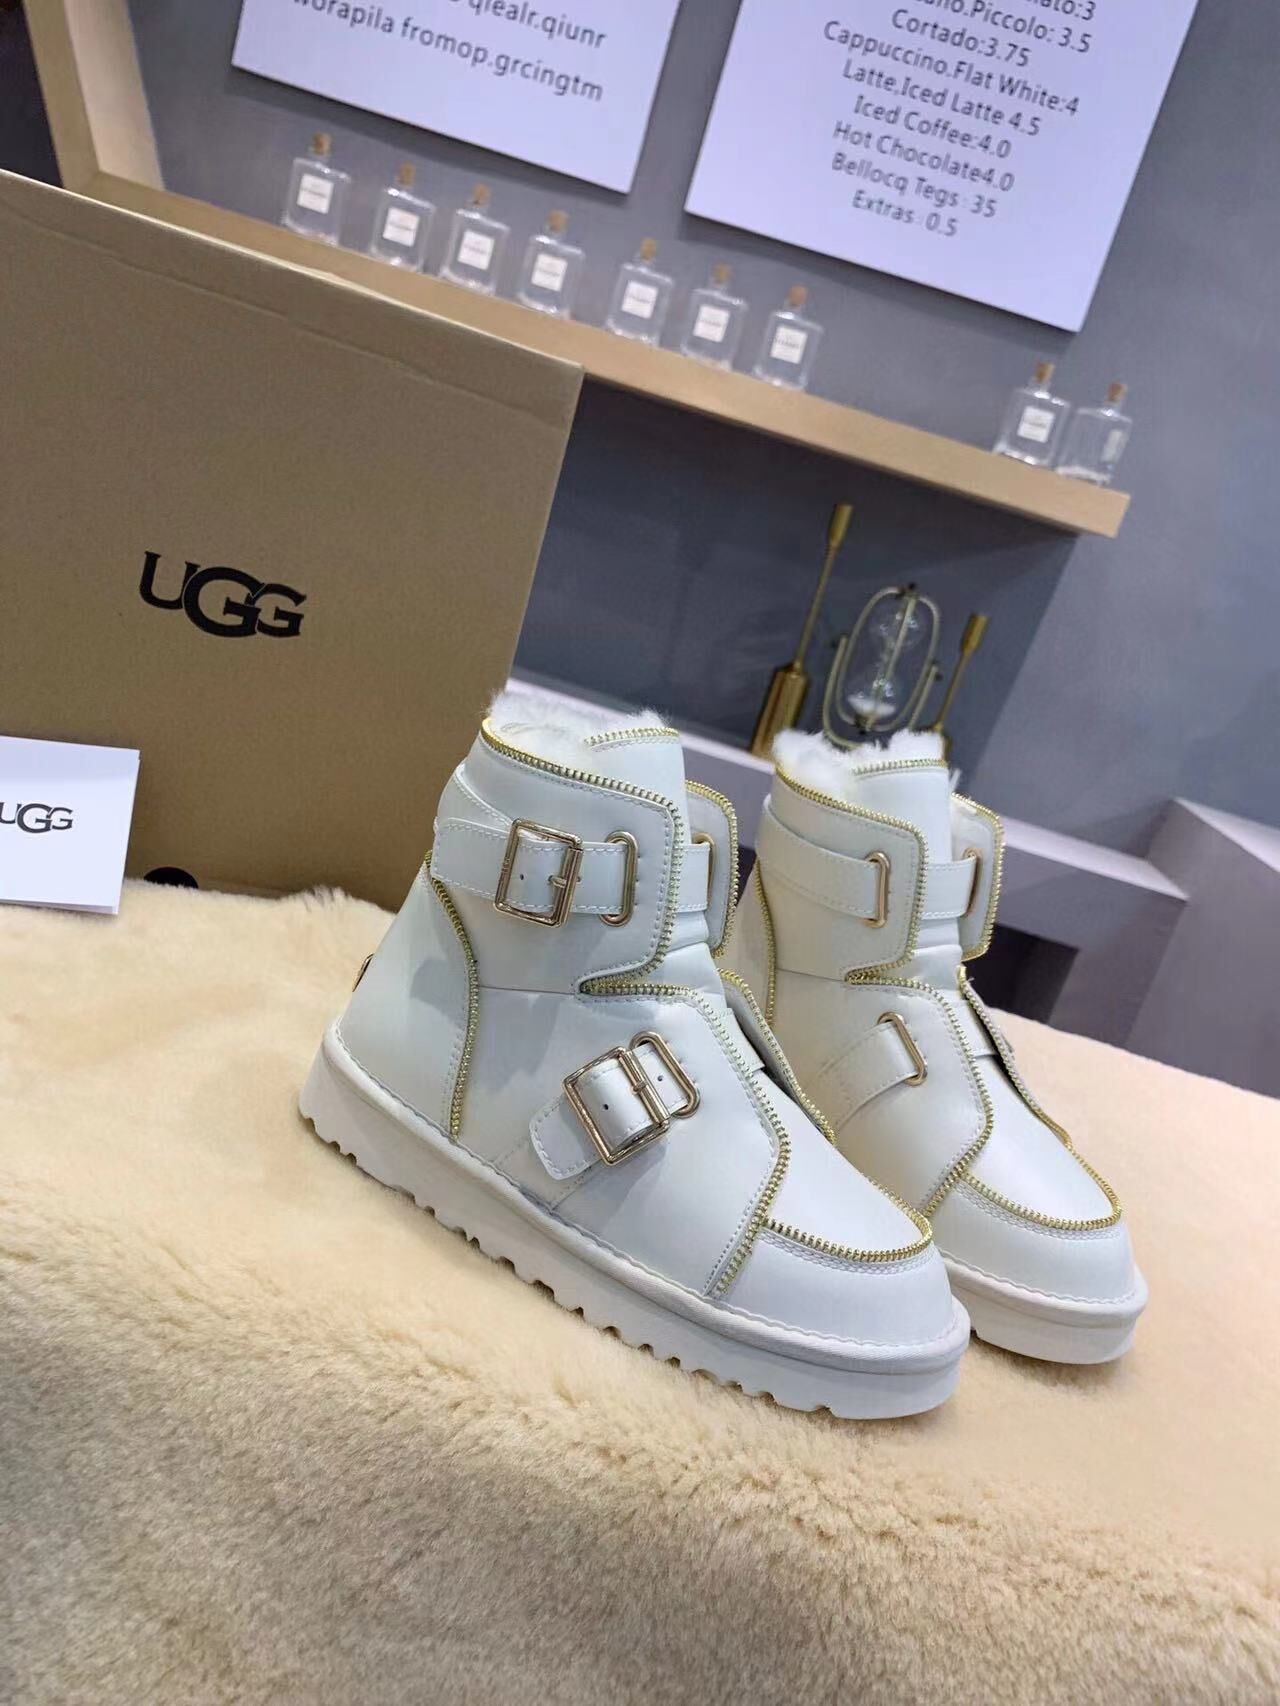 UGG Locomotive Boots Original Leather Full Wool Shoes UGG10361 White